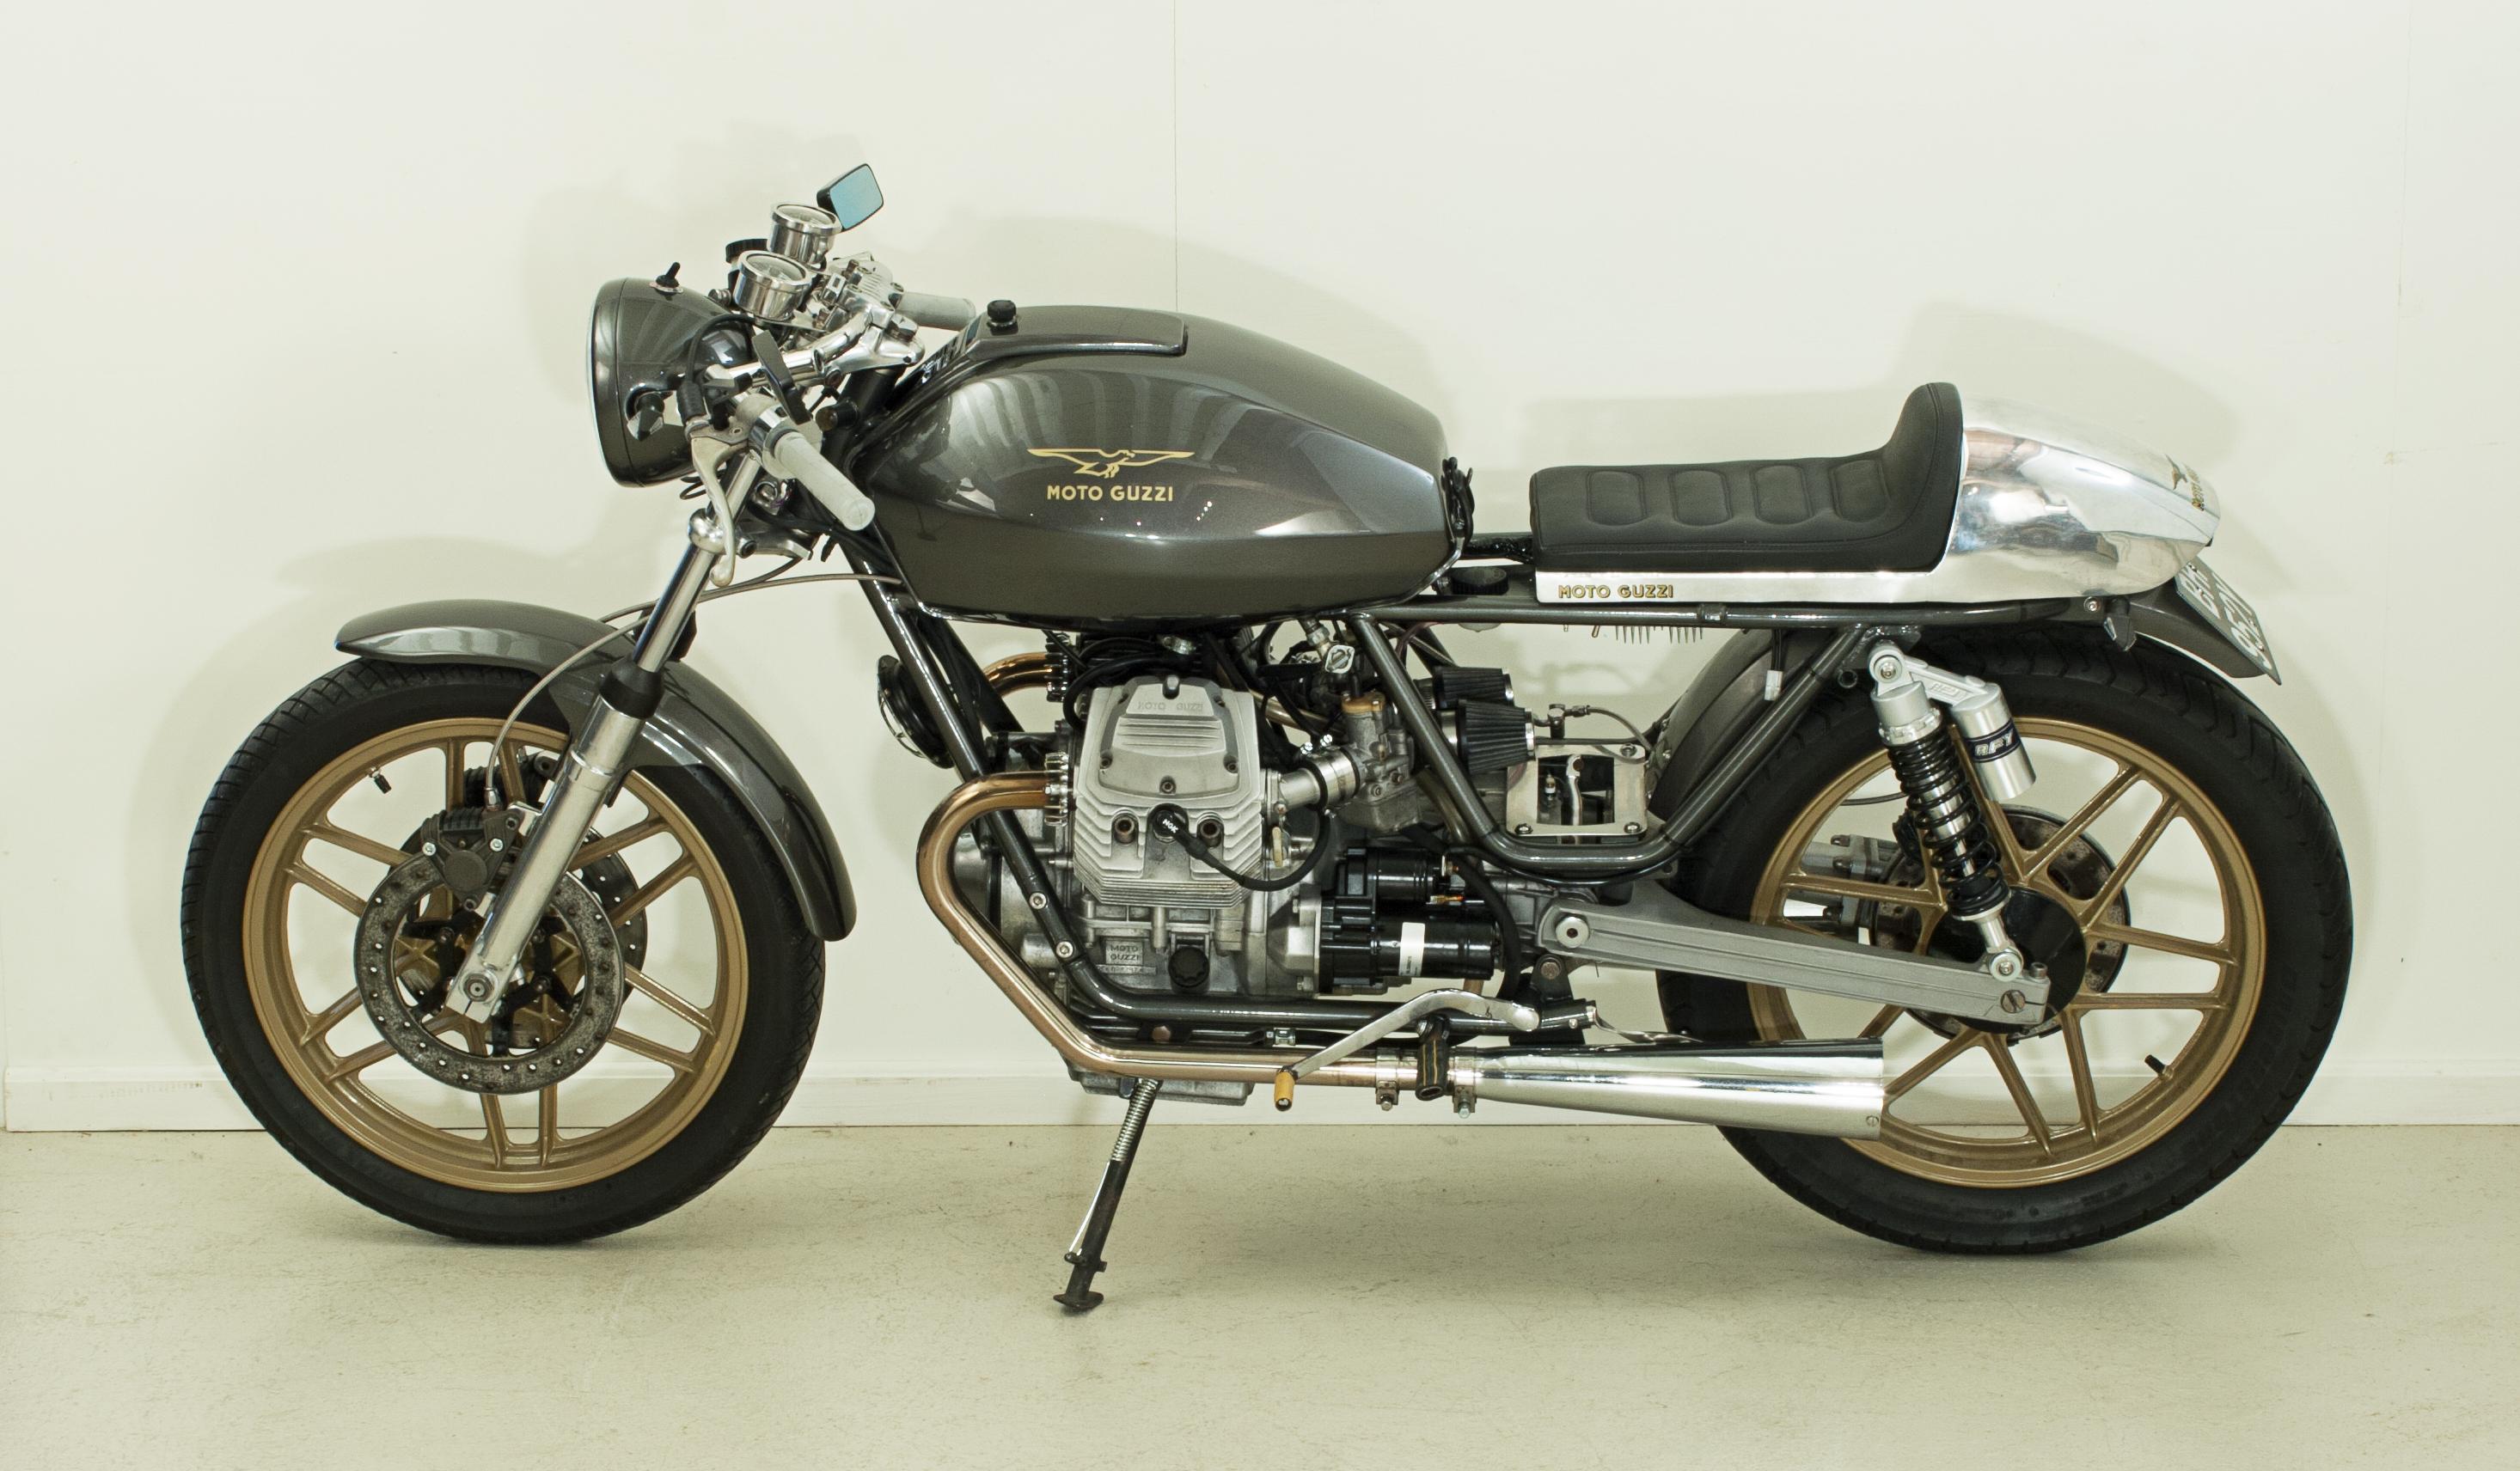 1982 Moto Guzzi Cafe Racer V50 Italian Motorcycle For Sale 3